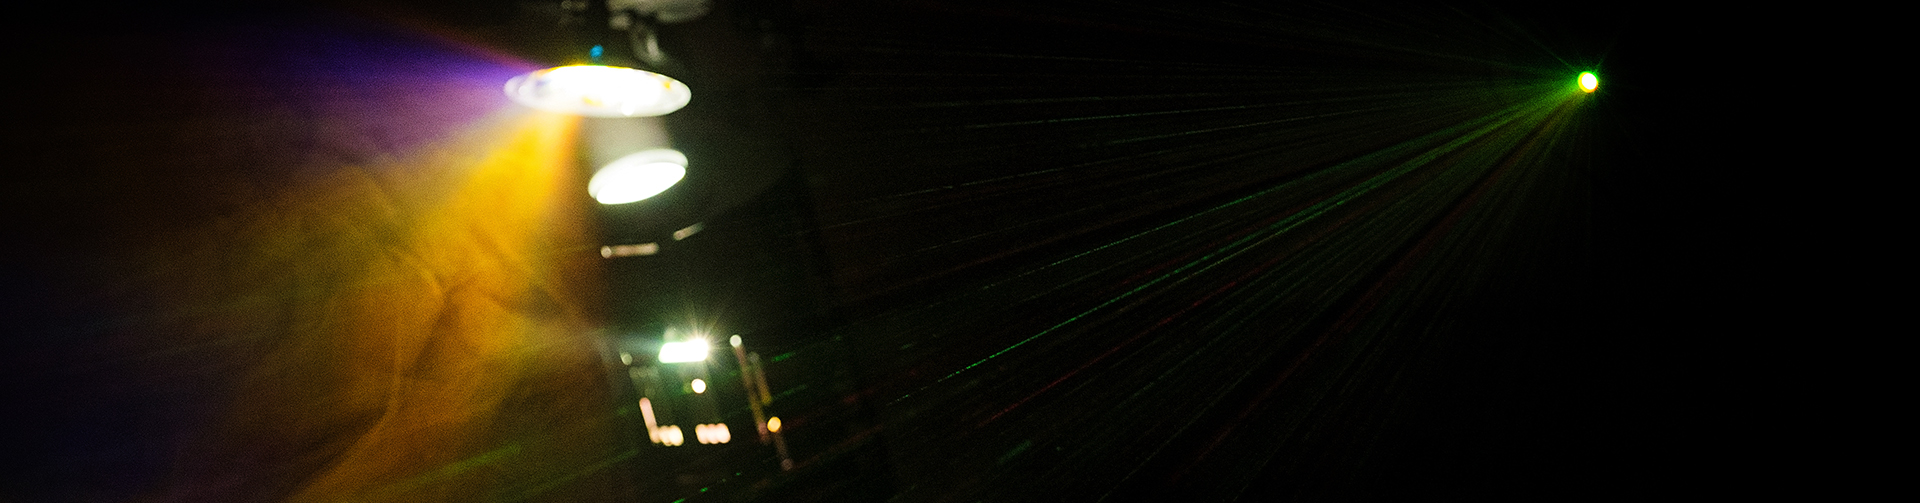 topaz effect light with laser